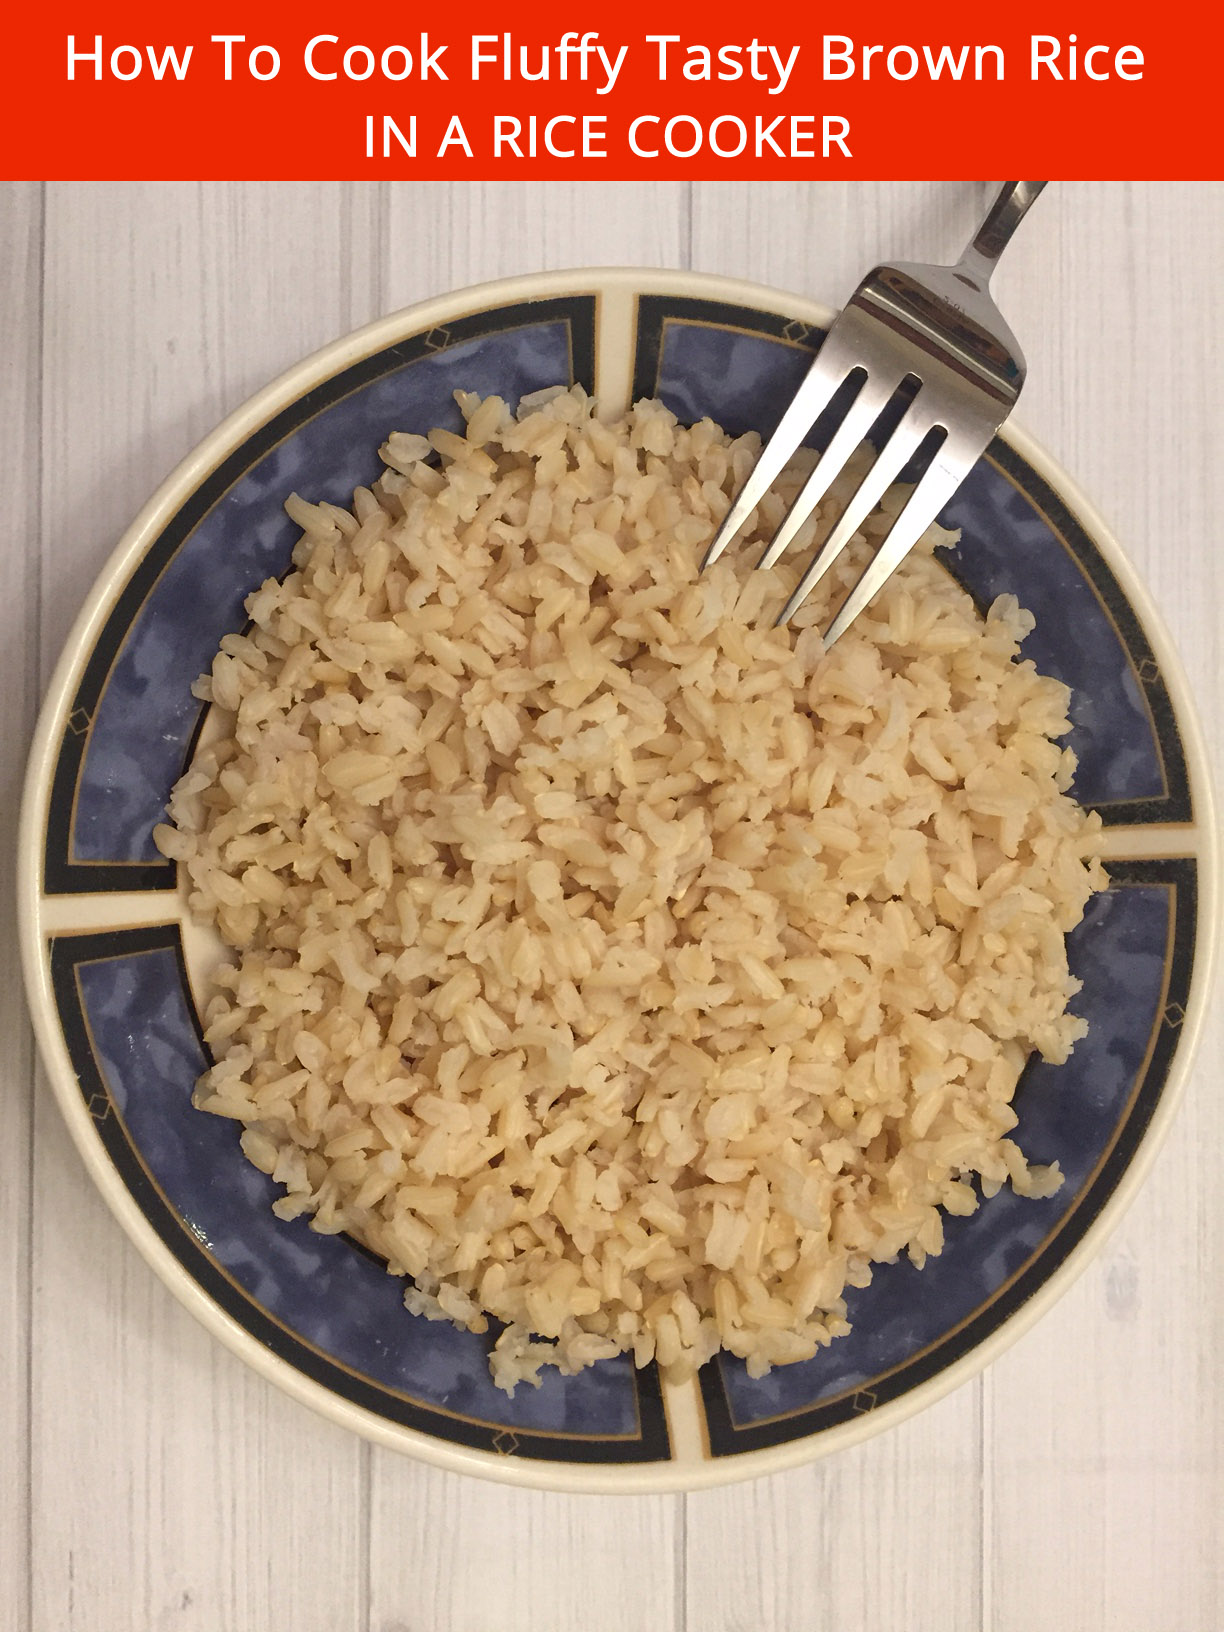 https://www.melaniecooks.com/wp-content/uploads/2015/12/rice_cooker_brown_rice2.jpg